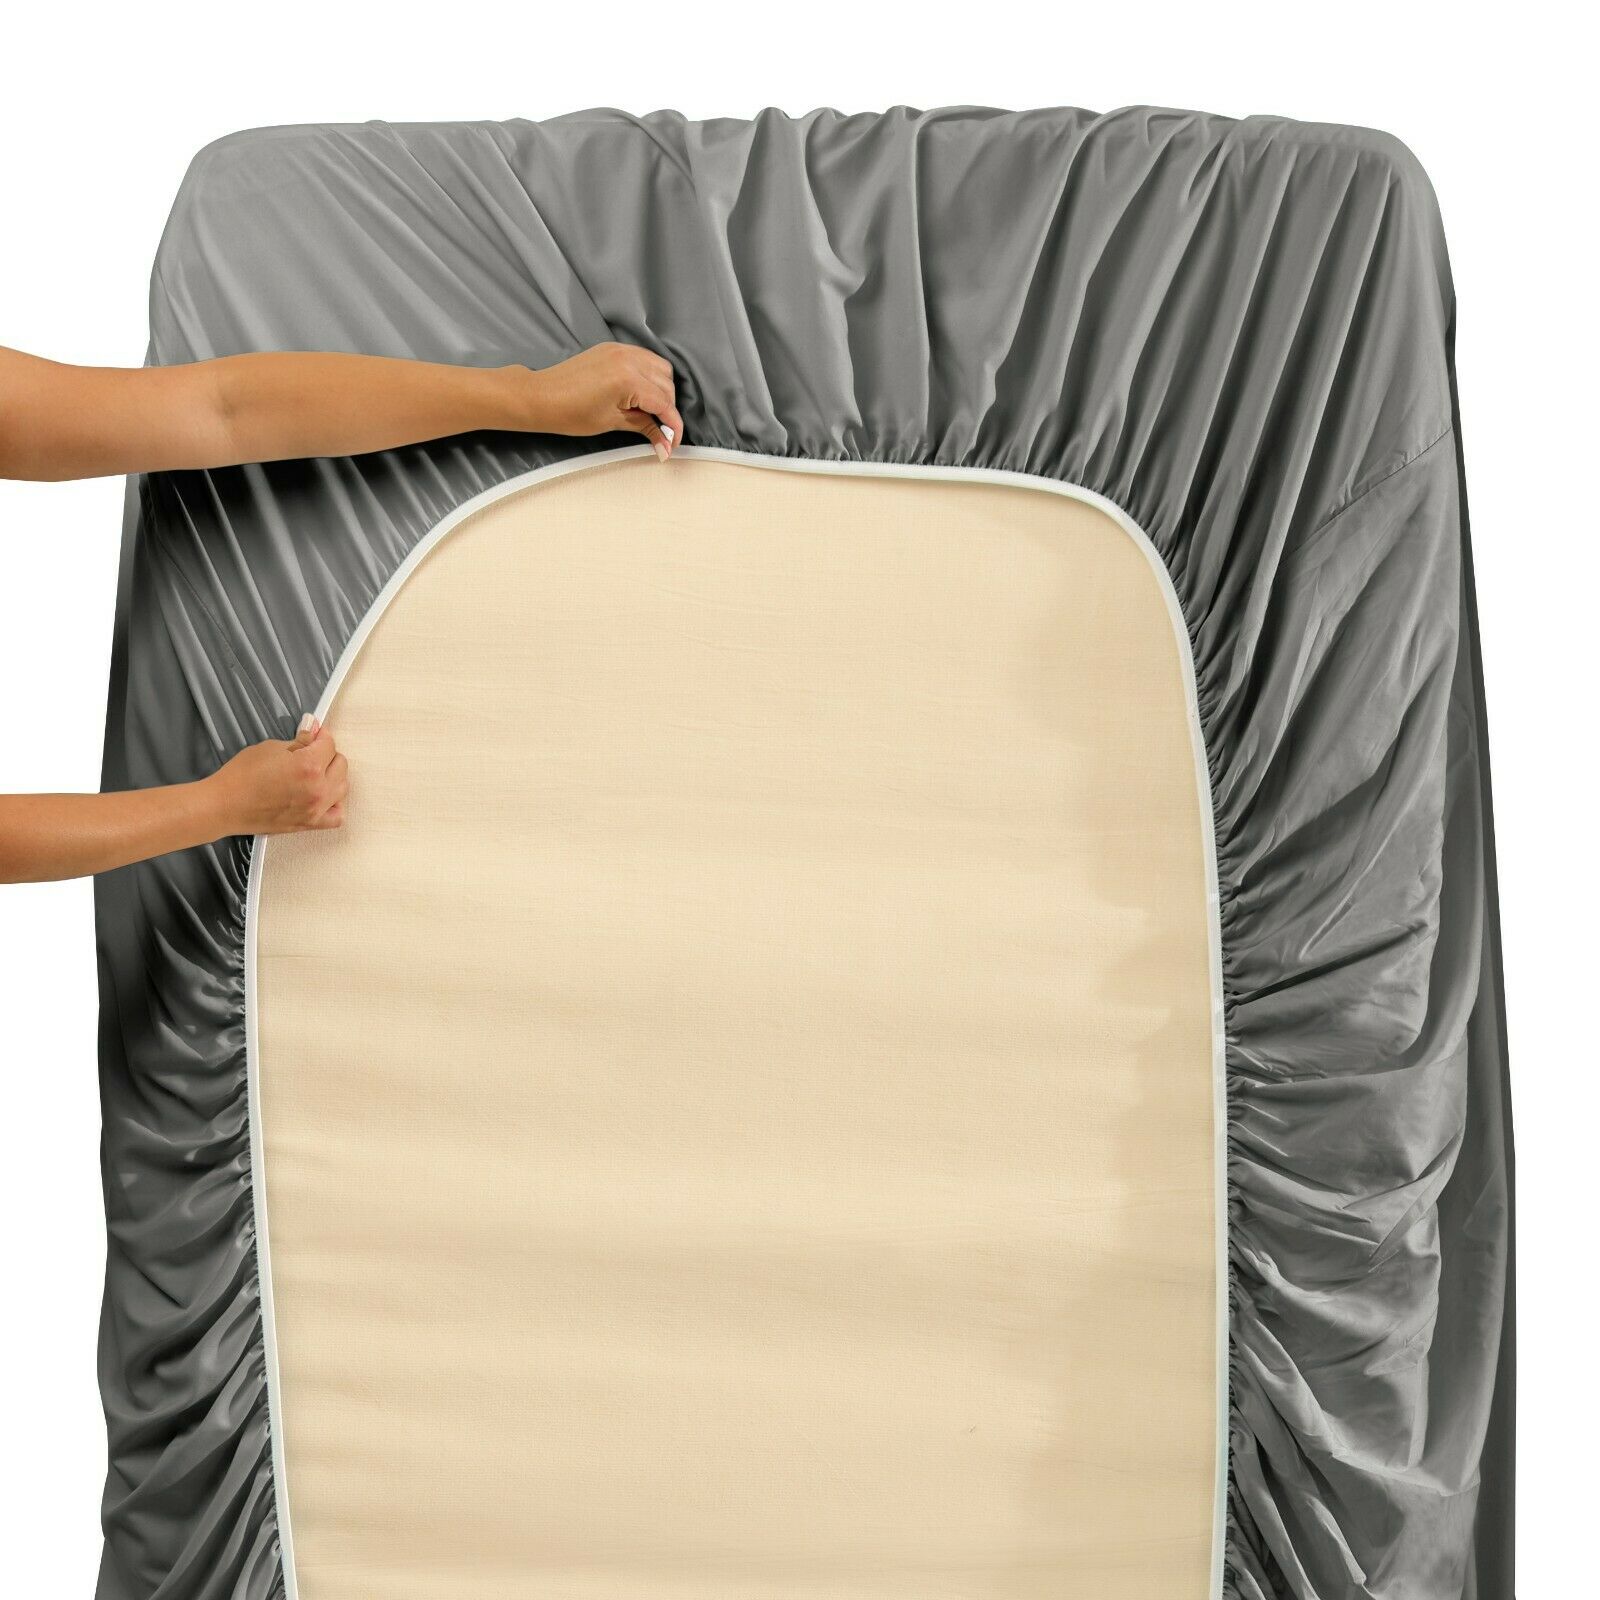 Egyptian Comfort 4 Piece Bed Sheet Set Deep Pocket Bed Sheets - gray